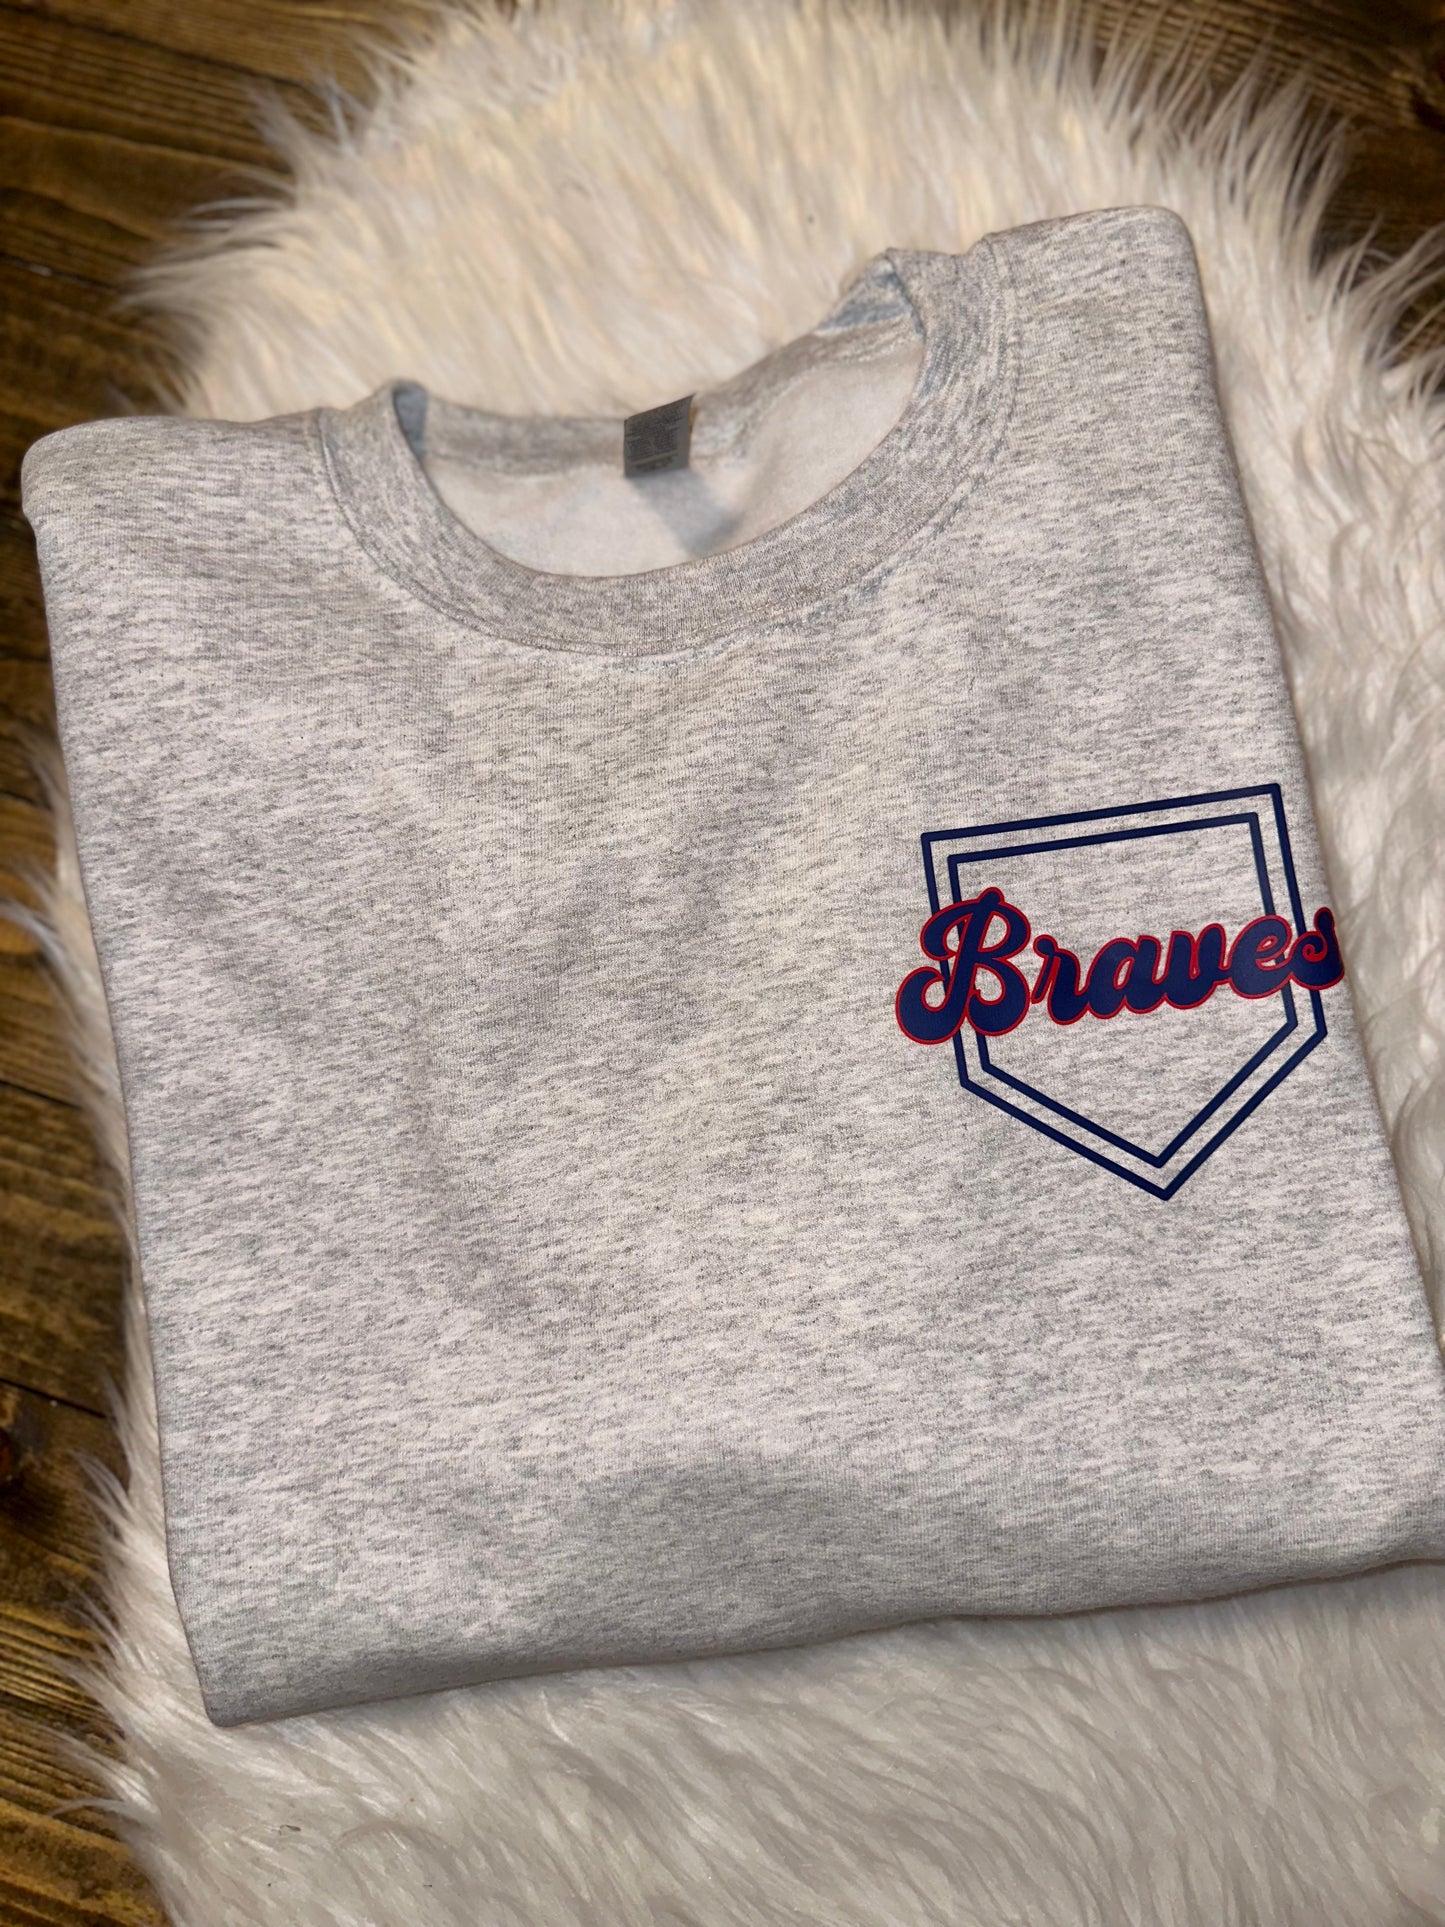 98 Braves Graphic Tee/Sweatshirt